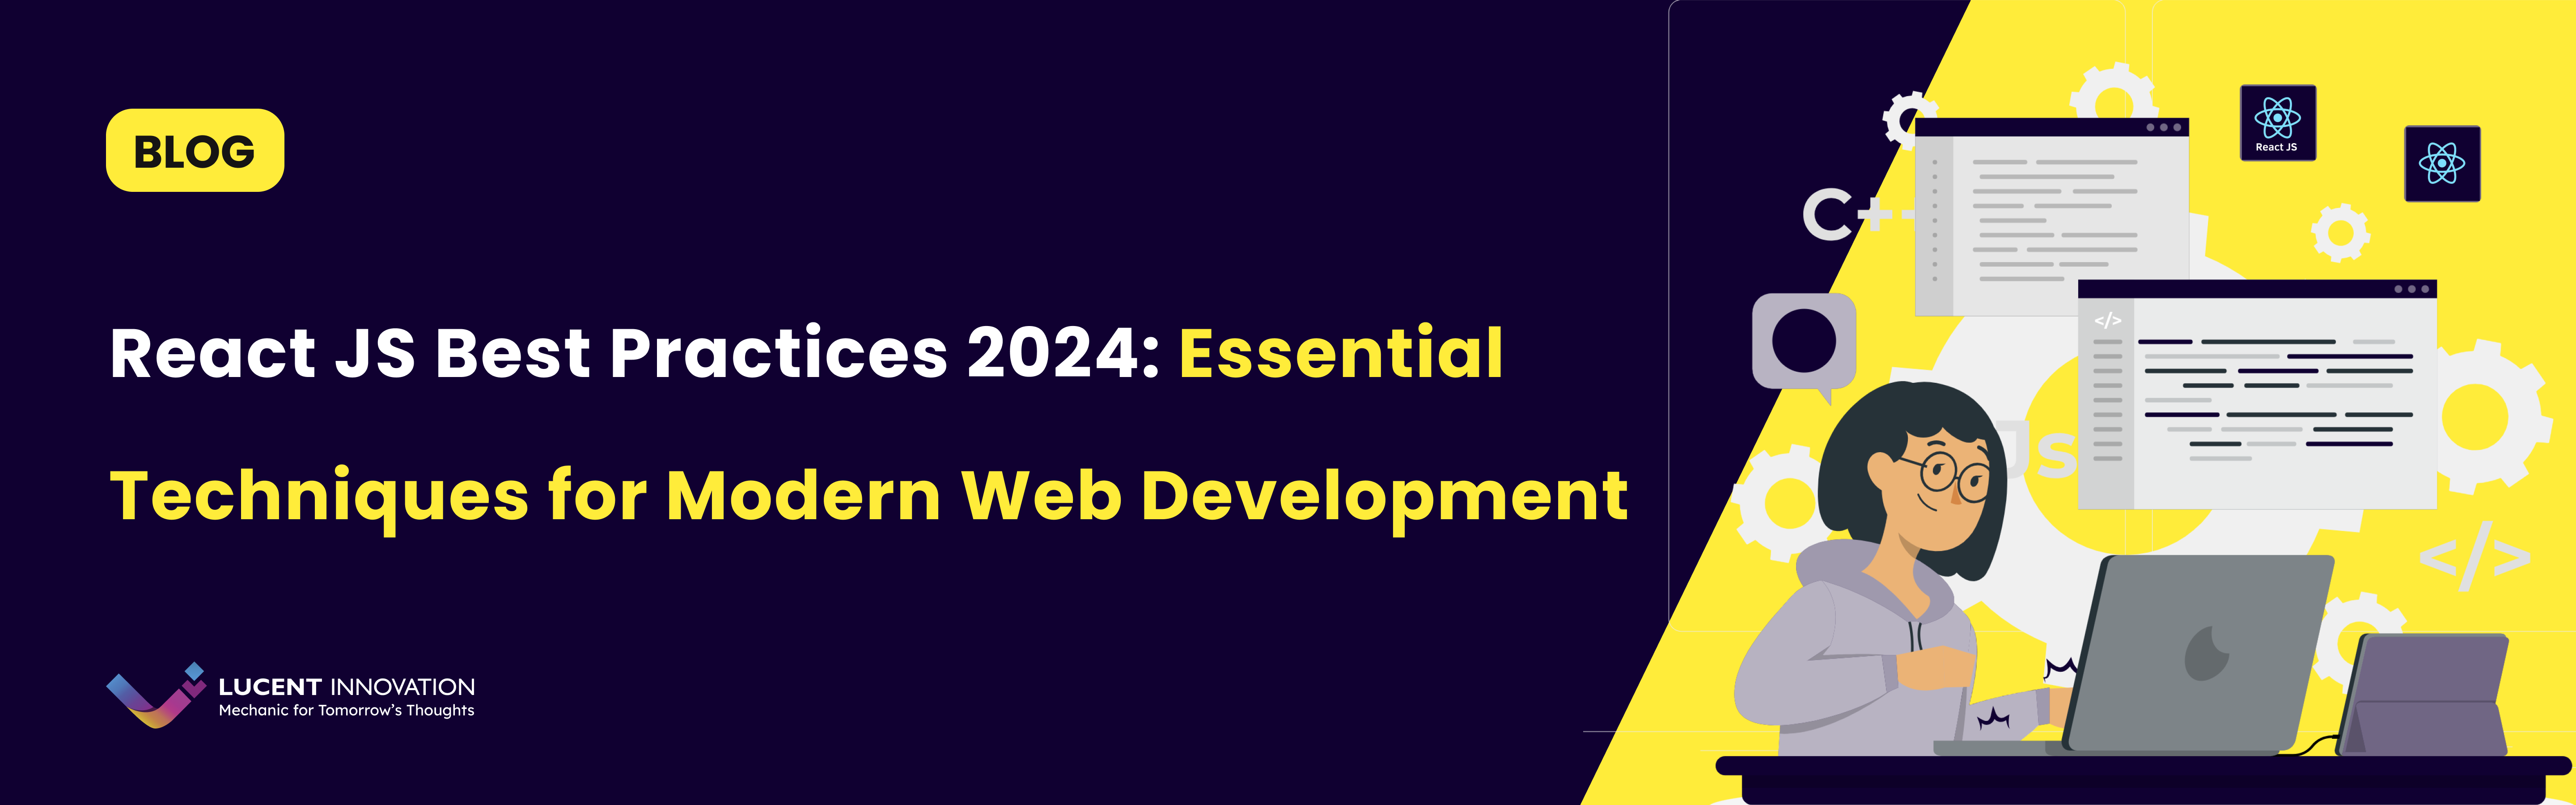 React JS Best Practices 2024: Essential Techniques for Modern Web Development